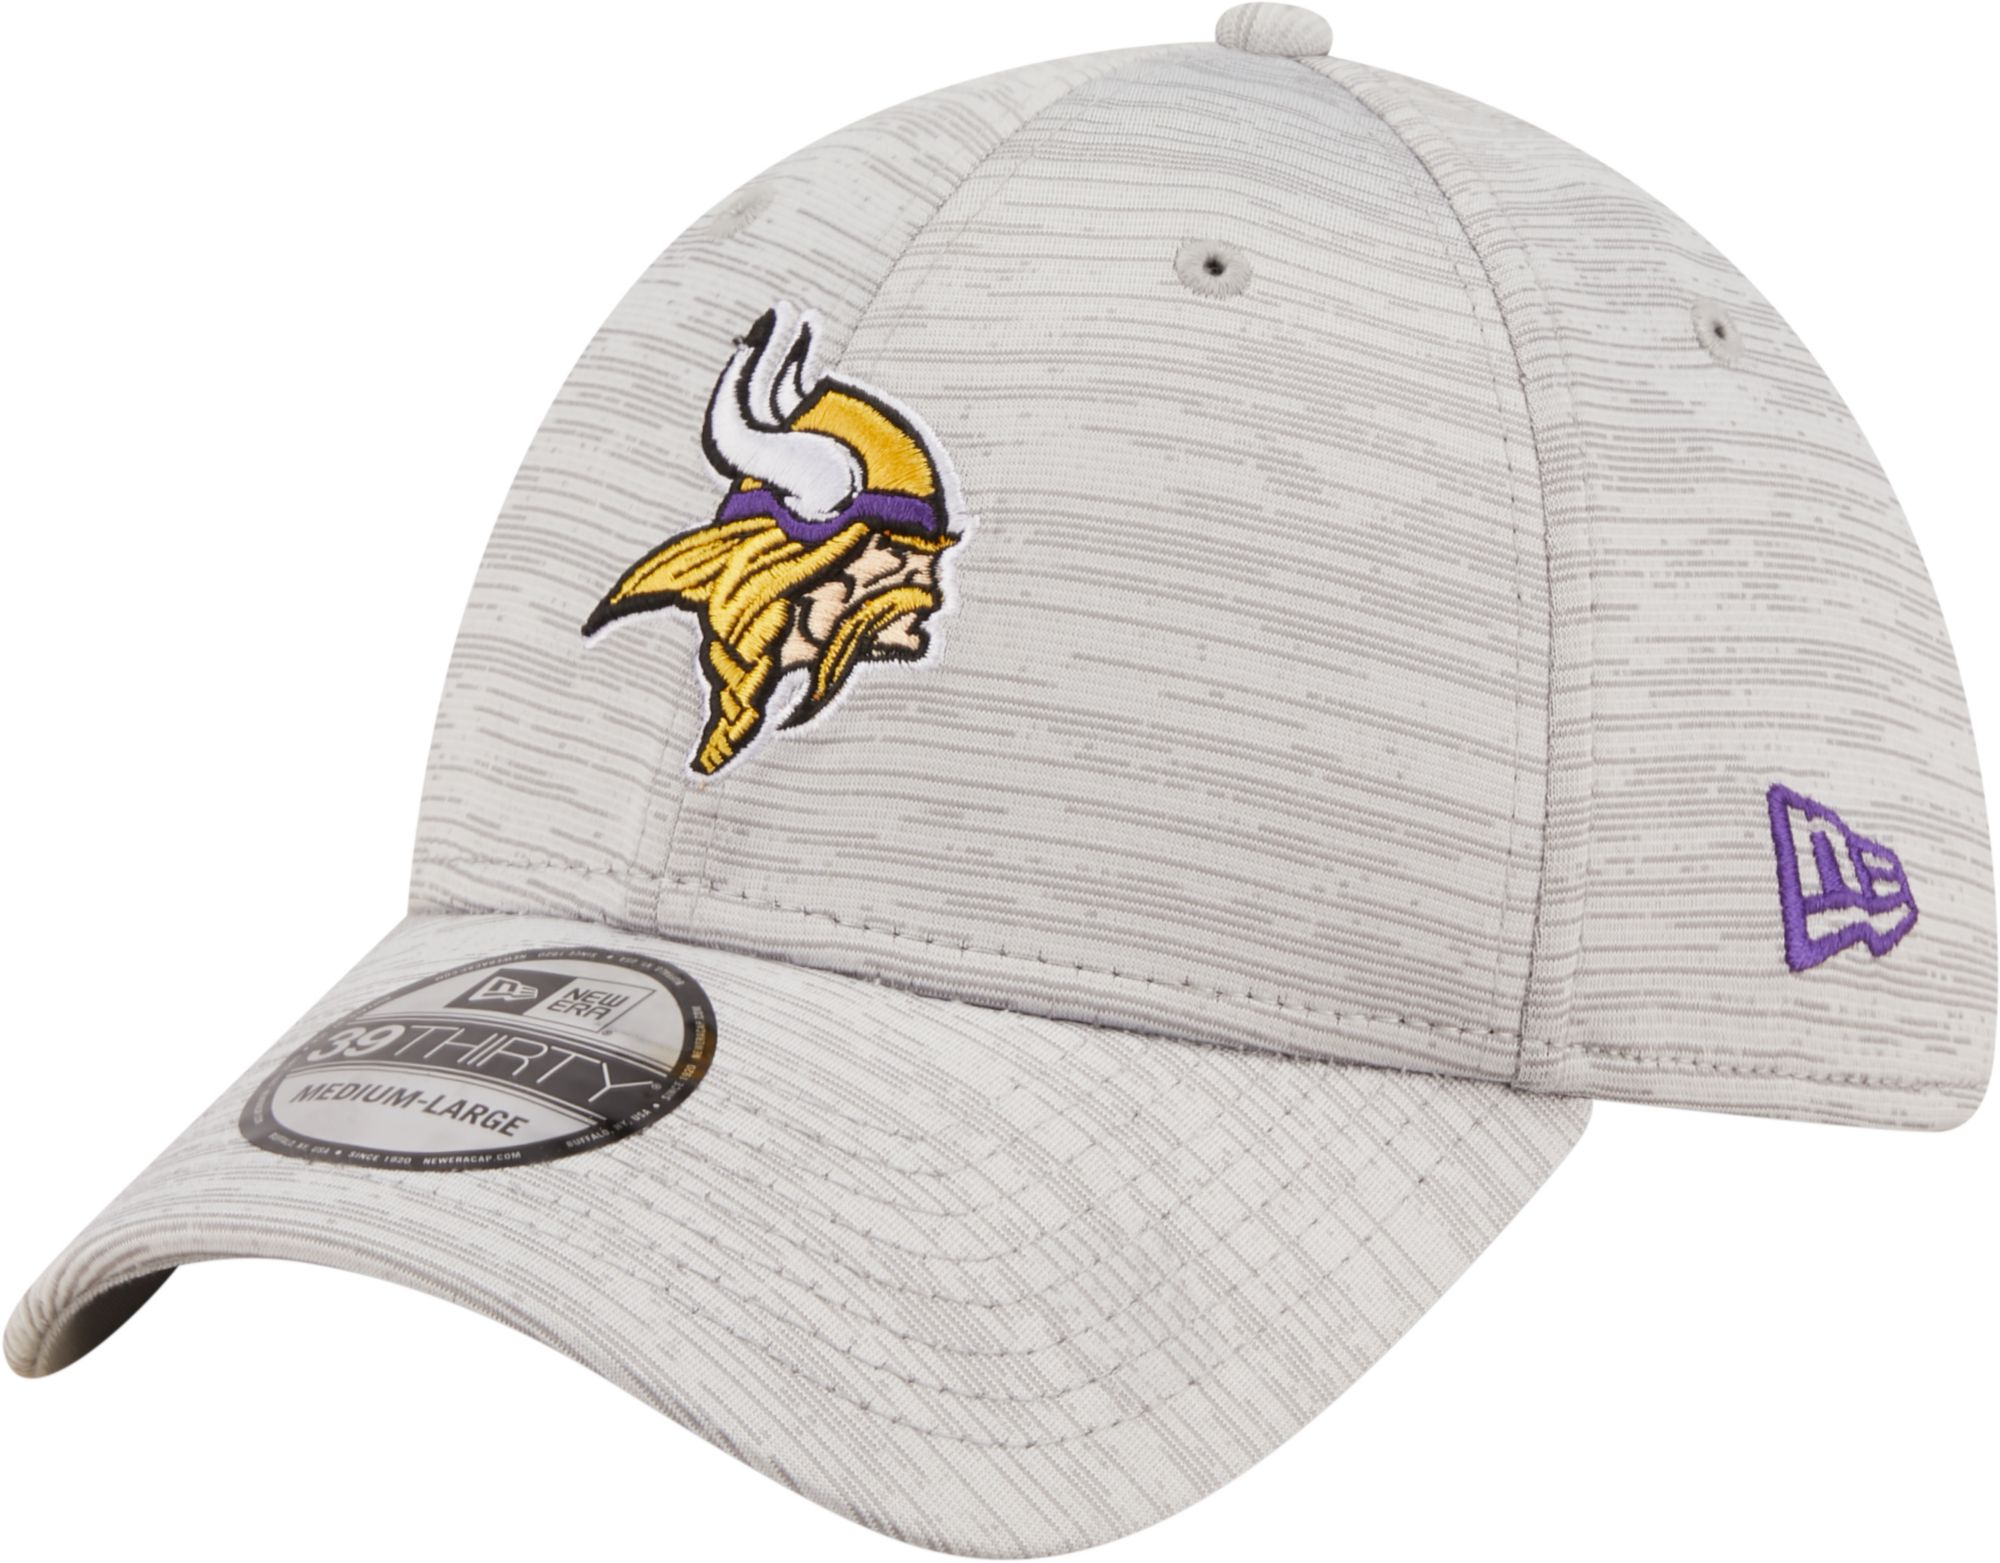 Vikings fitted cap